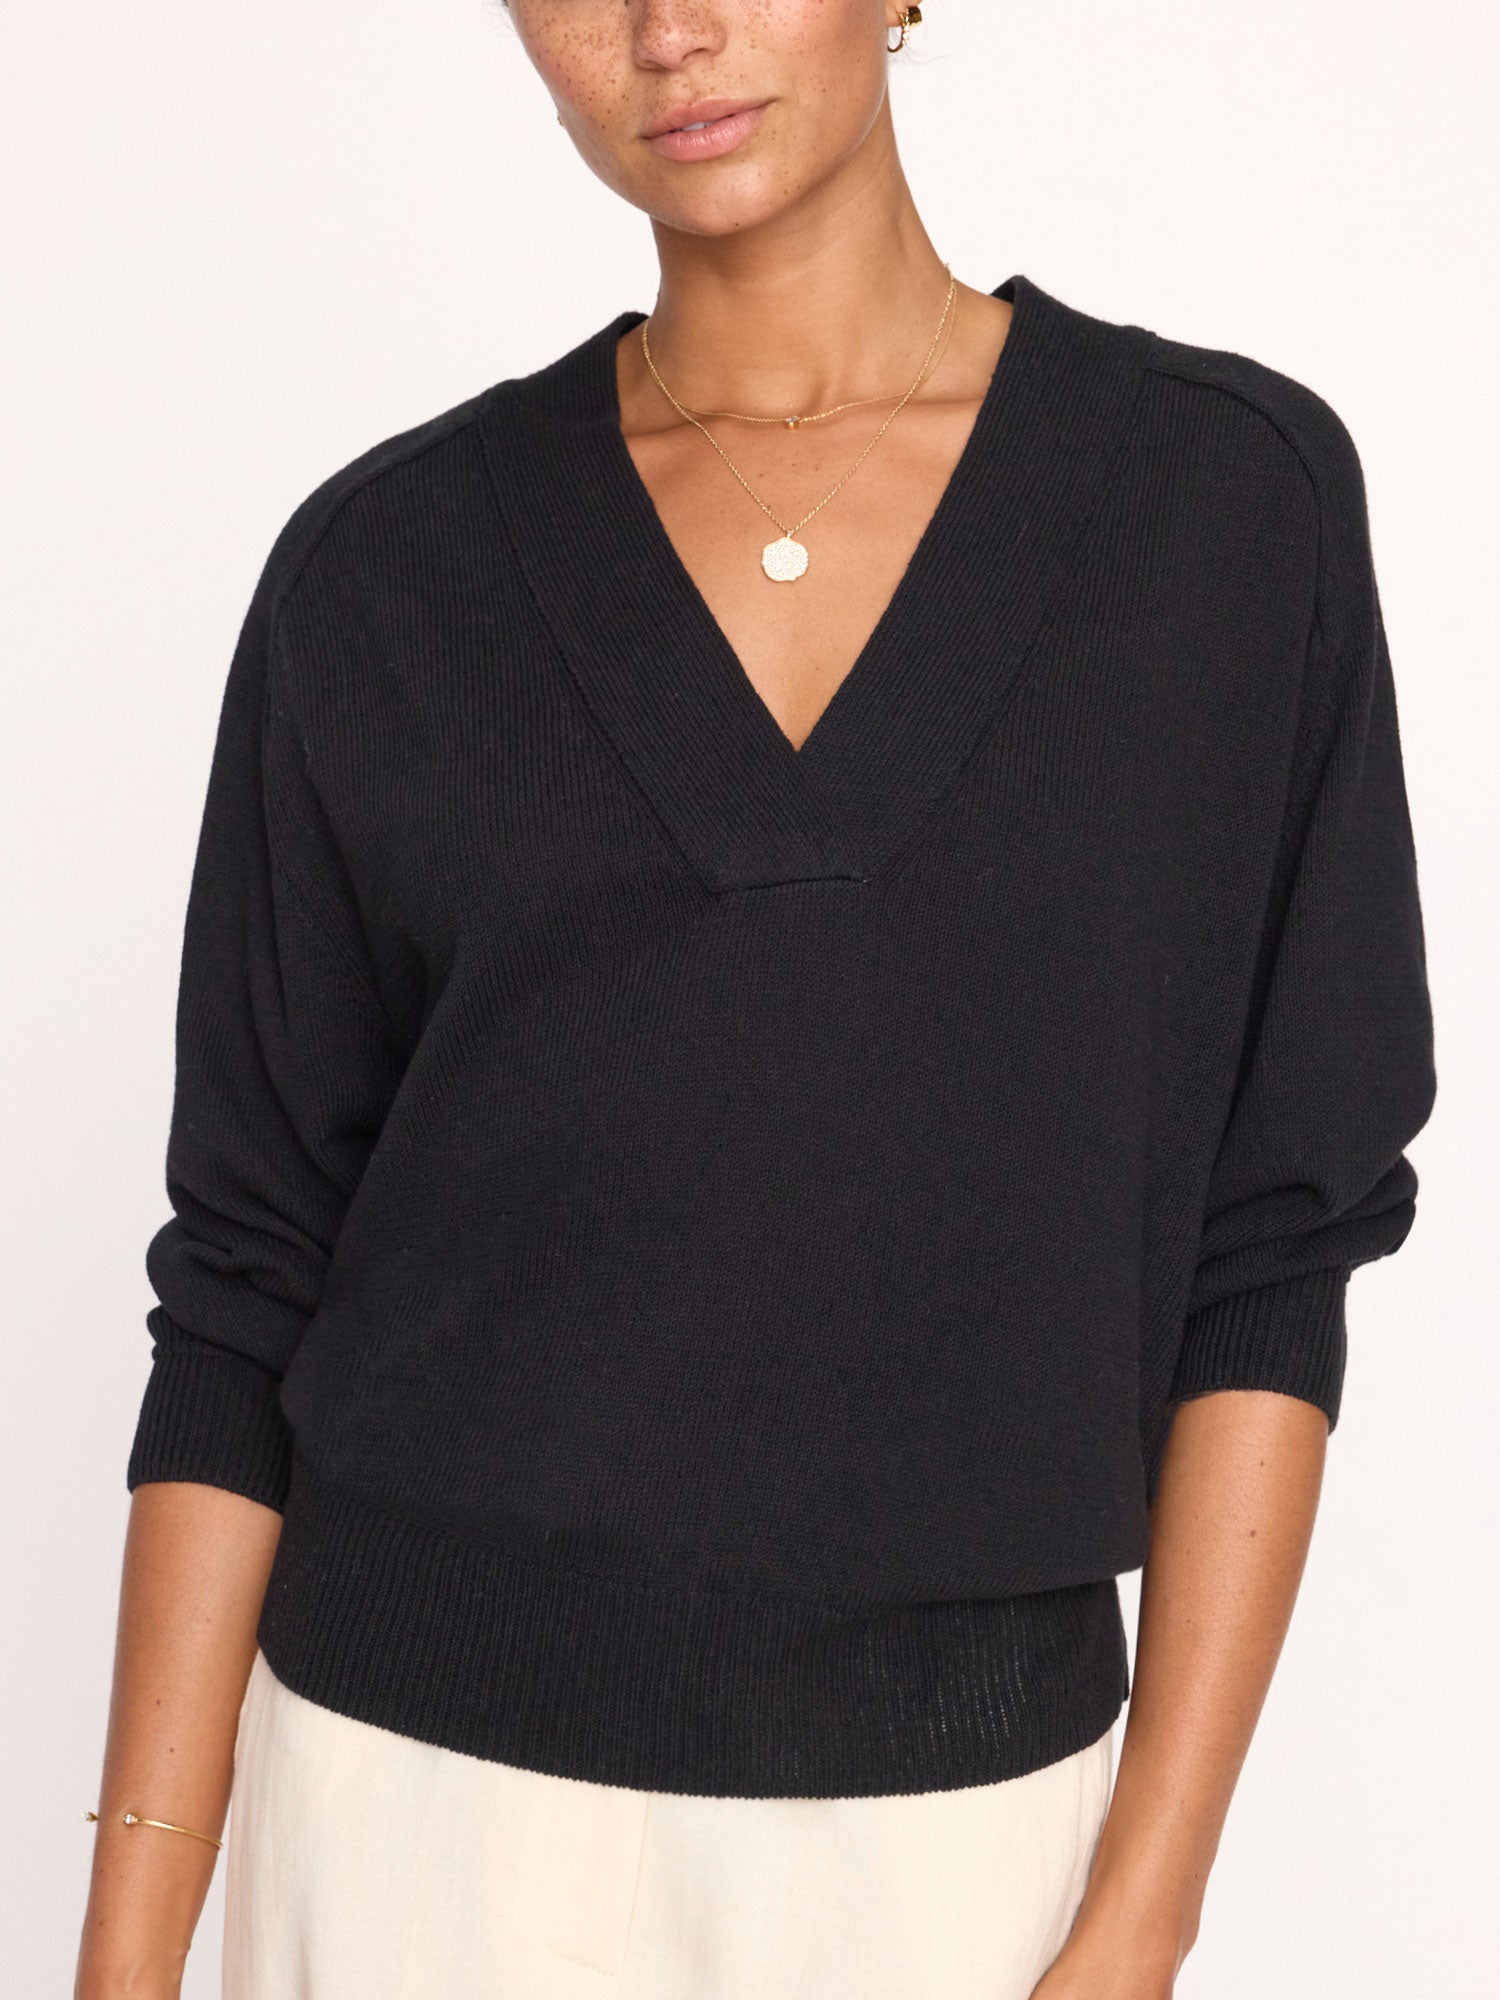 Imogen V-neck cotton black sweater front view